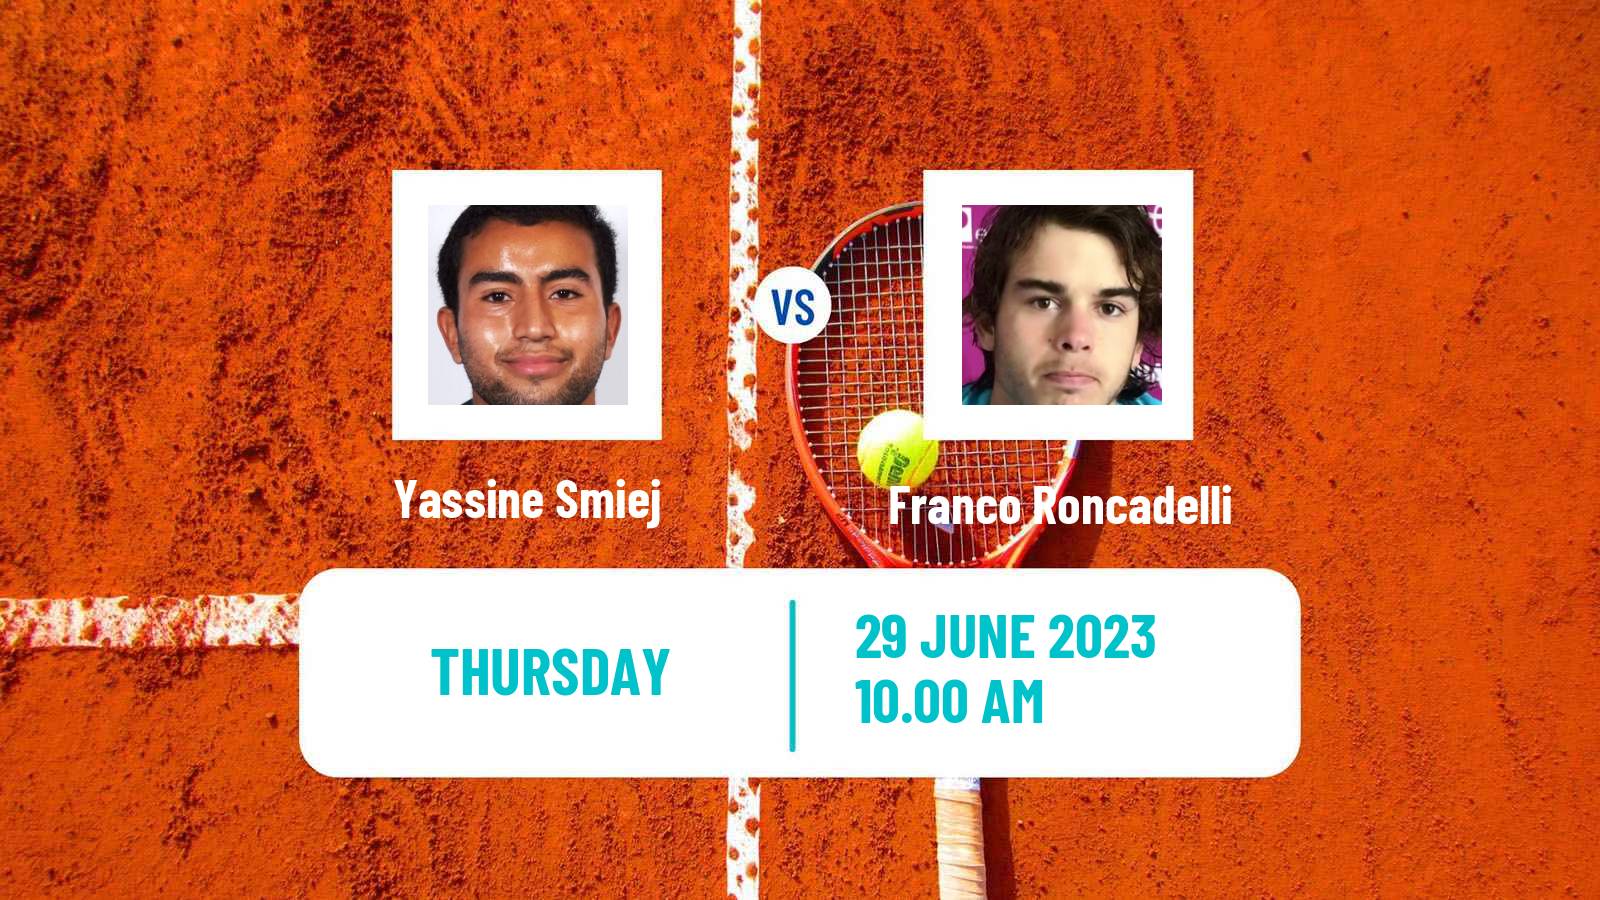 Tennis ITF M15 Casablanca 2 Men Yassine Smiej - Franco Roncadelli